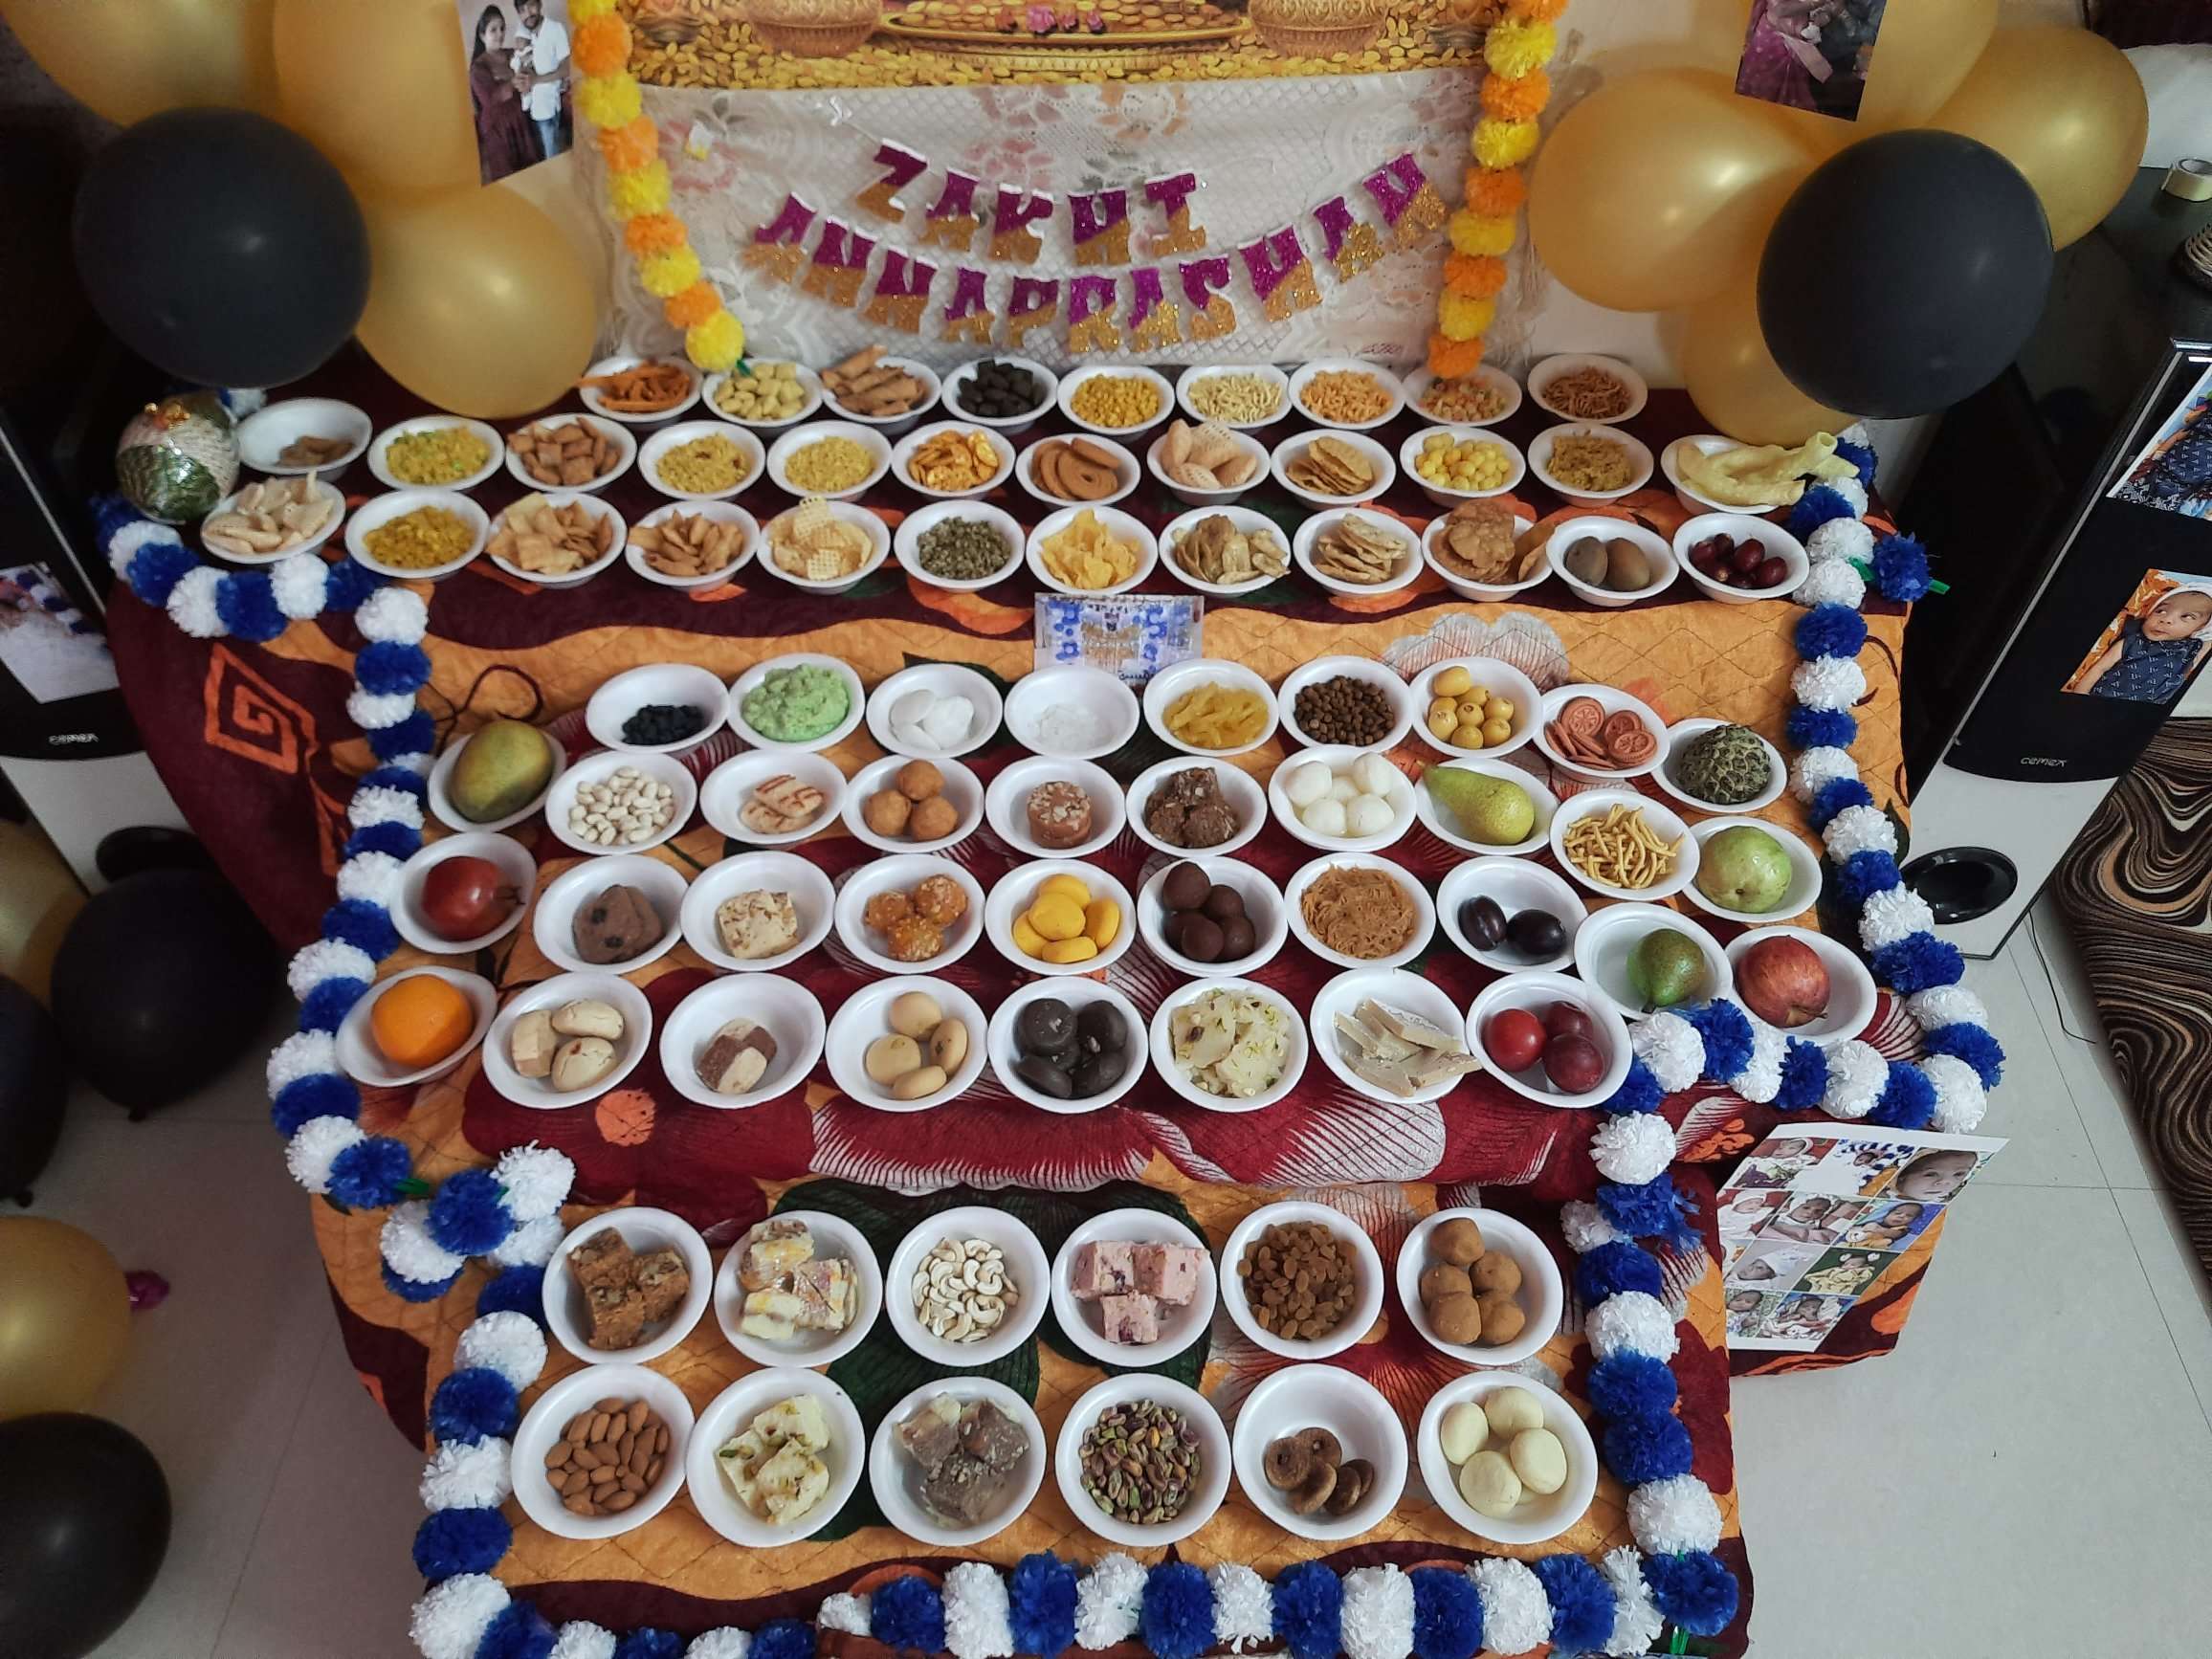 annaprashan vidhi sanskar and ceremony – Annaprashan Sanskar – What is it, Importance, Method, Recipes and Tips